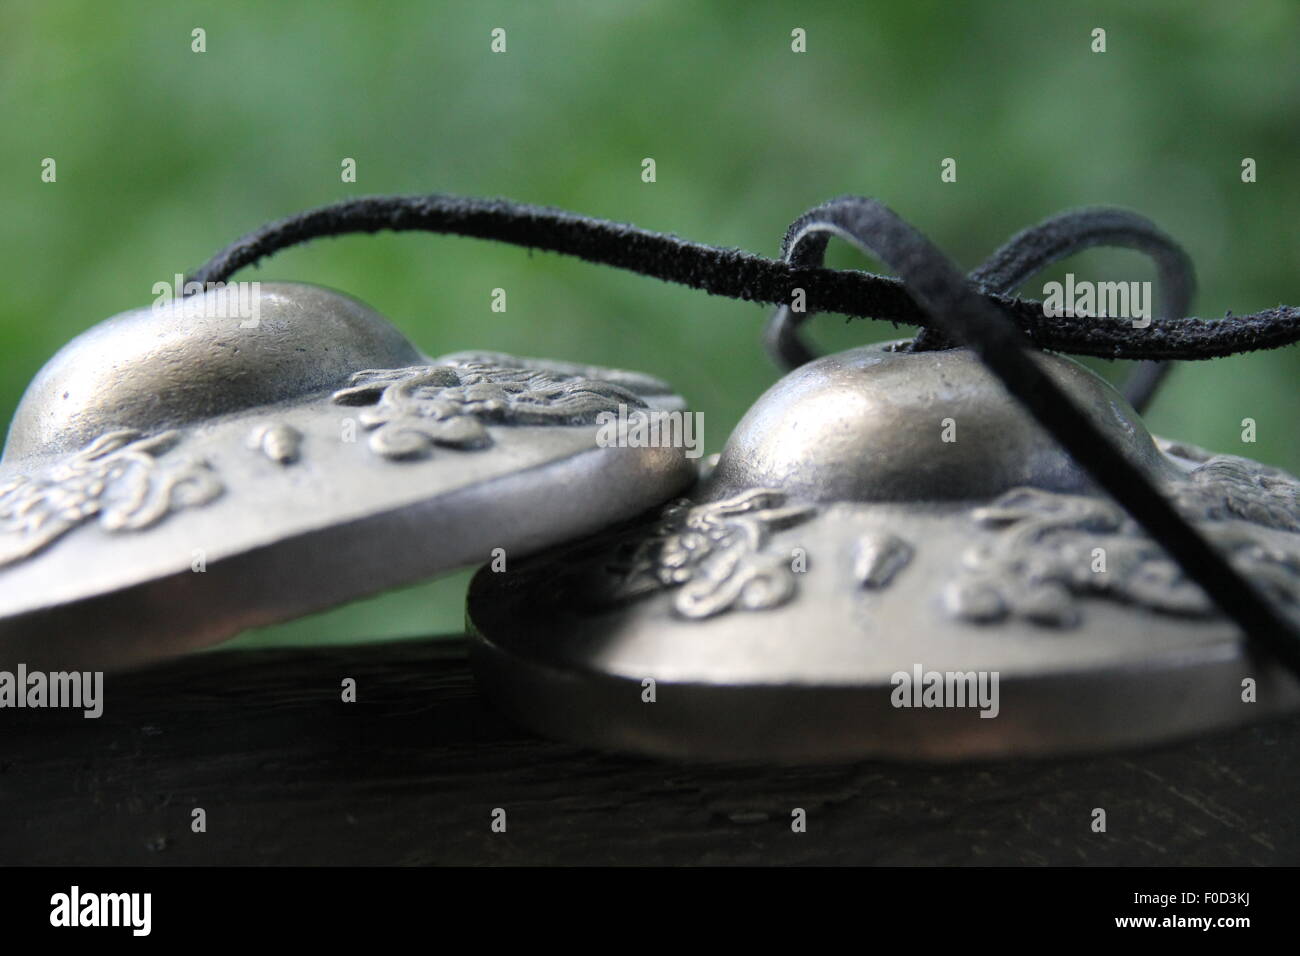 tibetan bells, bells, zen, buddhist bells, buddhism, religion, eastern, eastern religion, creative Stock Photo